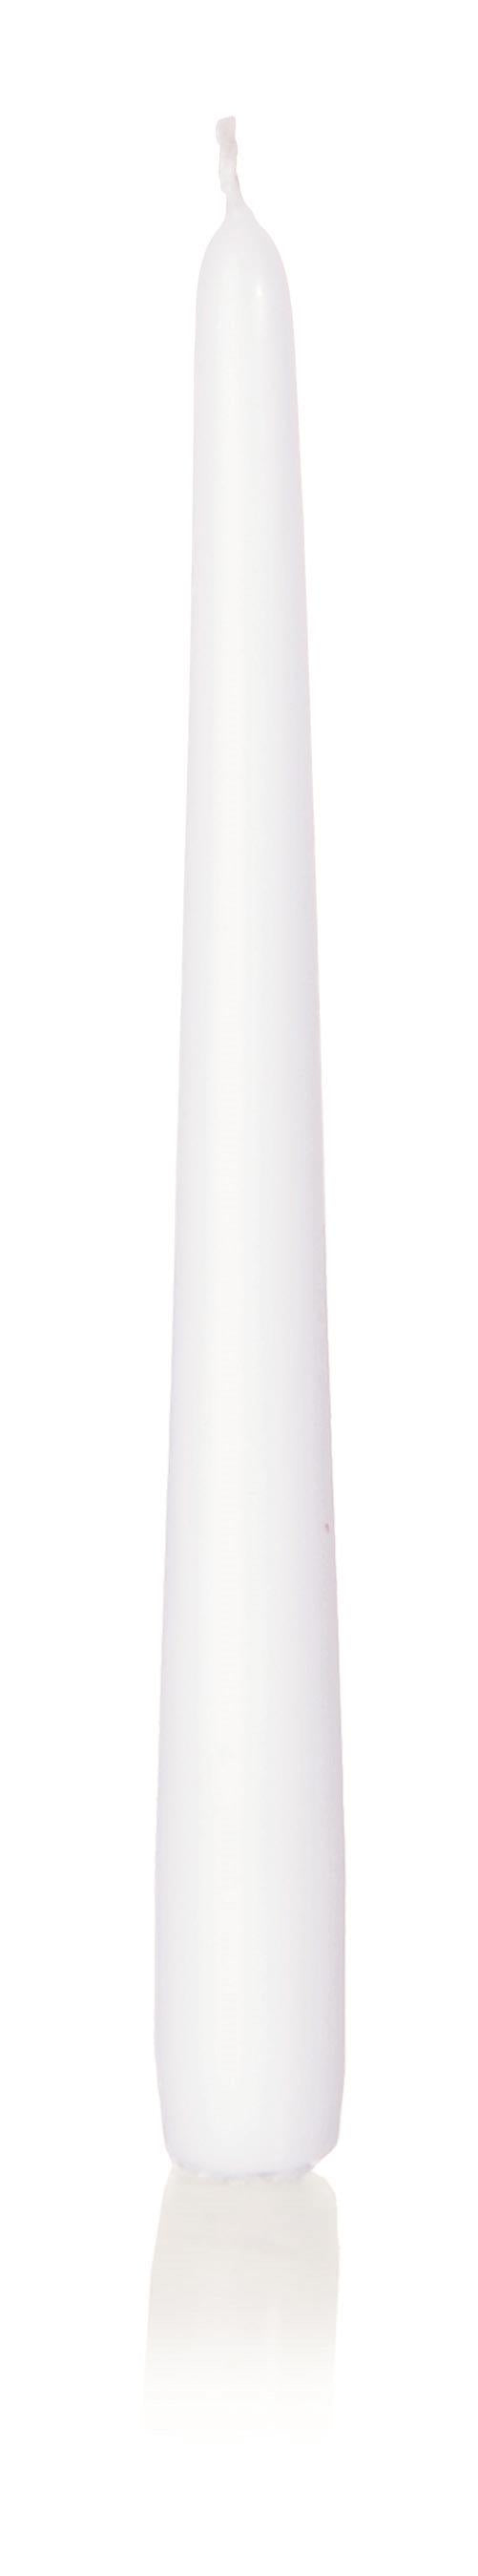 12x Konische Kerzen 250/25mm (Weiß)